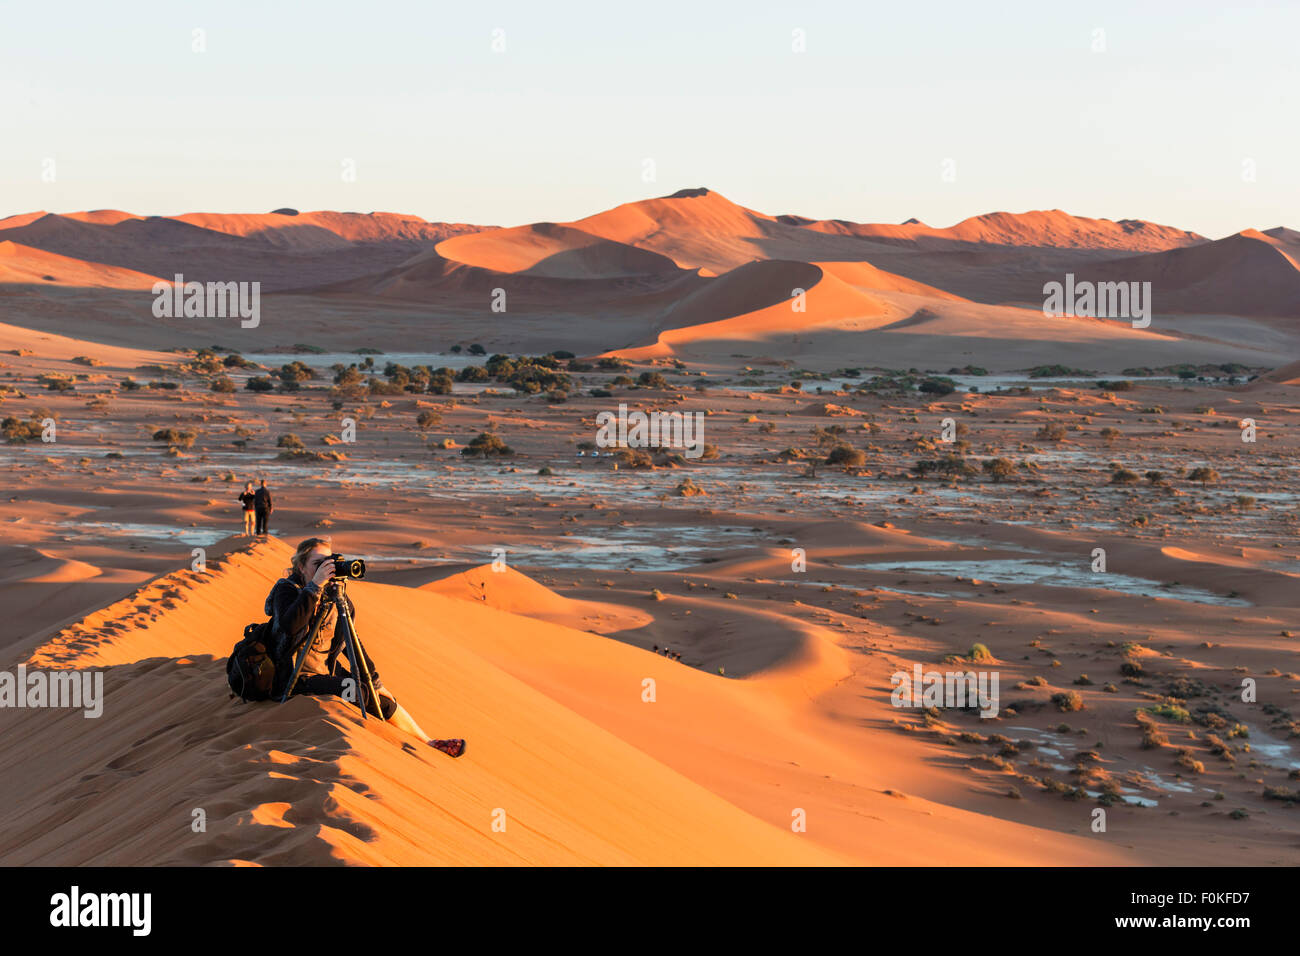 La Namibia, Namib Desert, Namib Naukluft National Park, turistico a fotografare il paesaggio Foto Stock